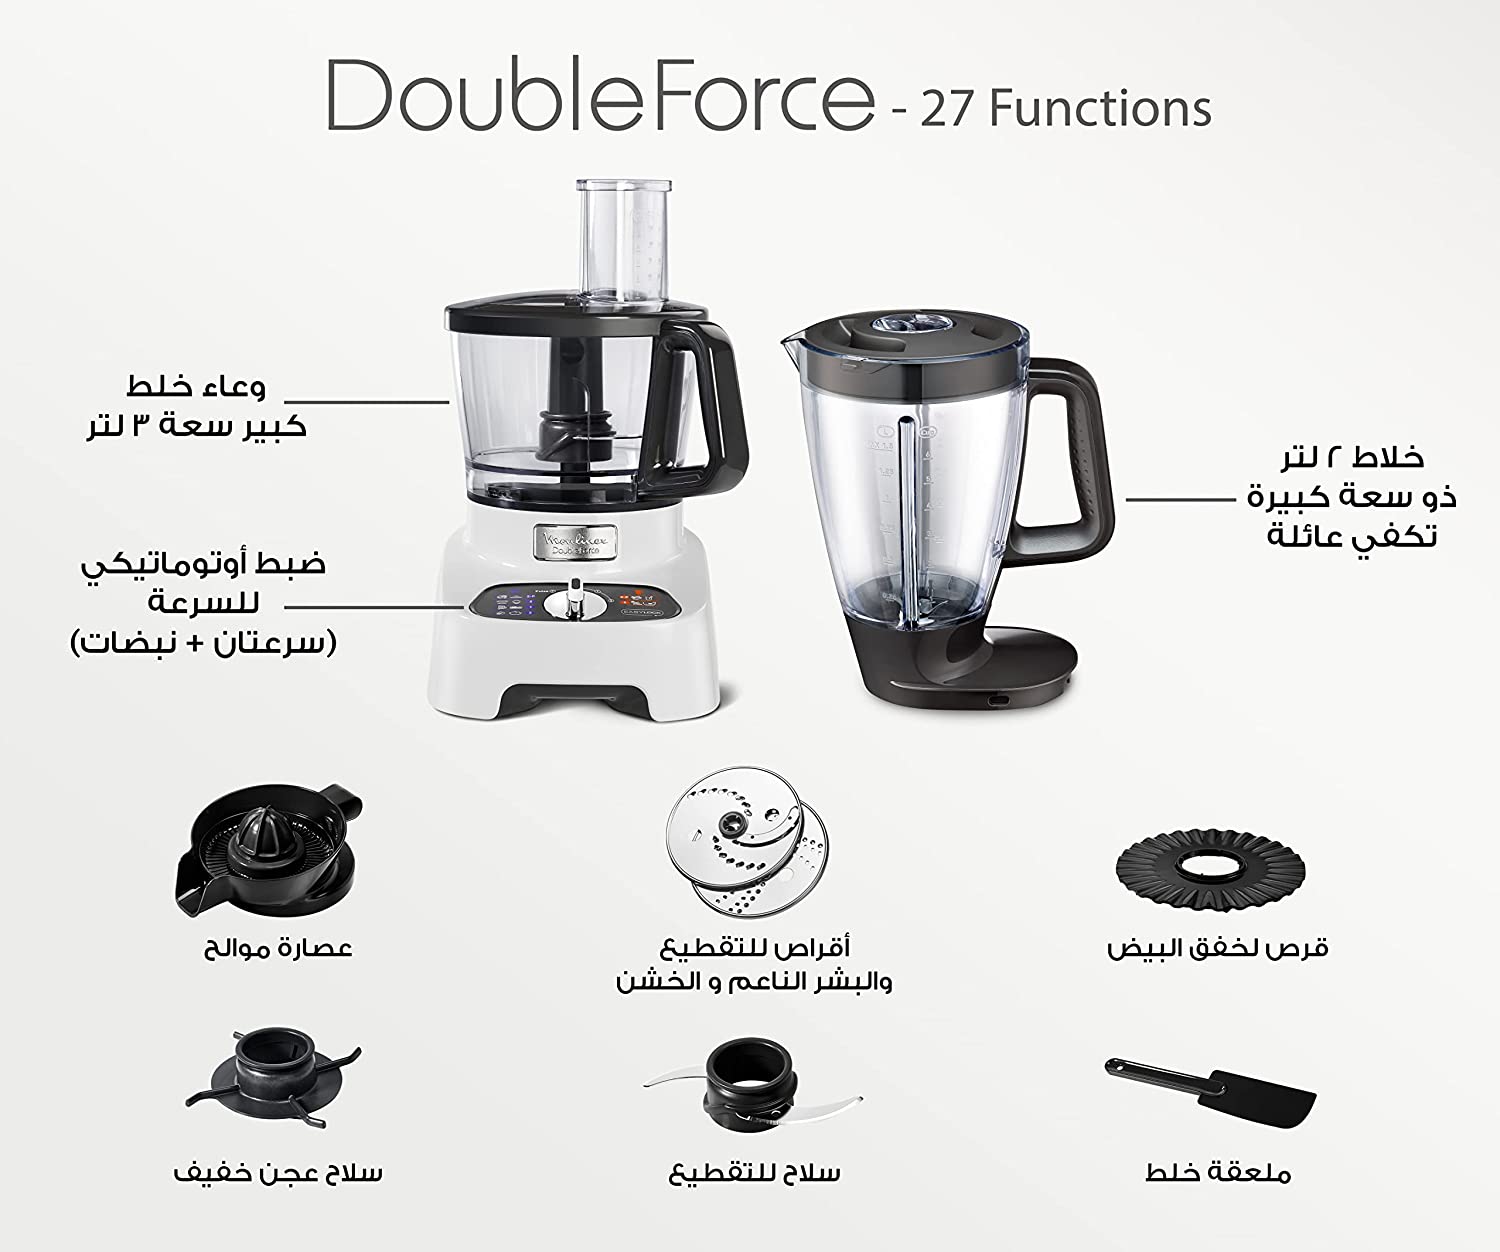 Moulinex Double Force Food Processor, 1000 Watt, 27 Functions, Black & White - FP823125